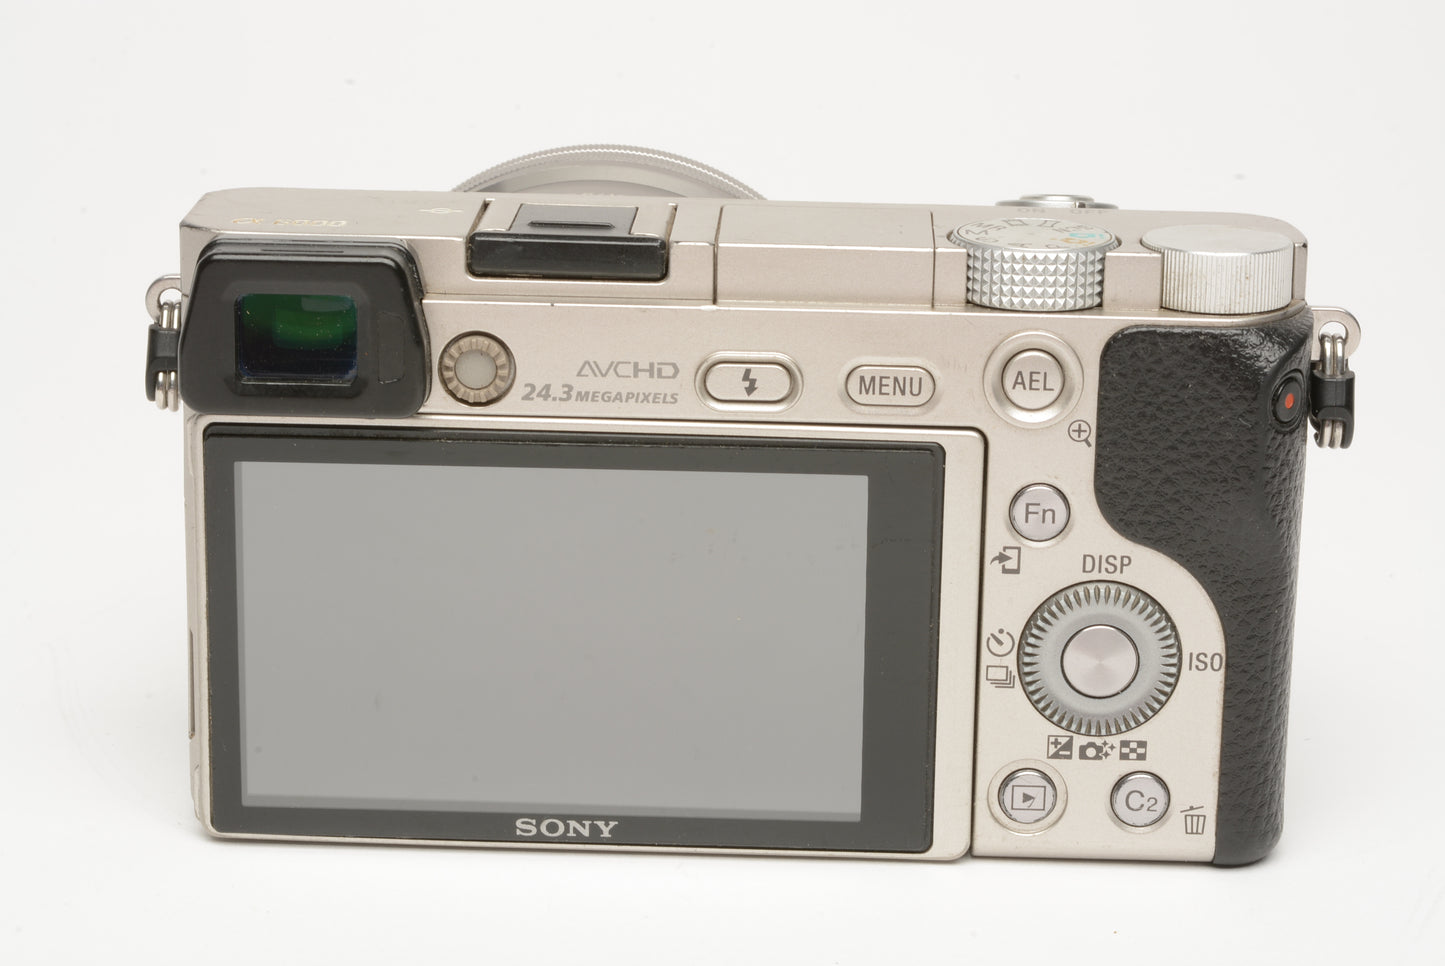 Fujifilm XT-2 Mirrorless digital camera body, batt+charger+box, Only 10,695 Acts